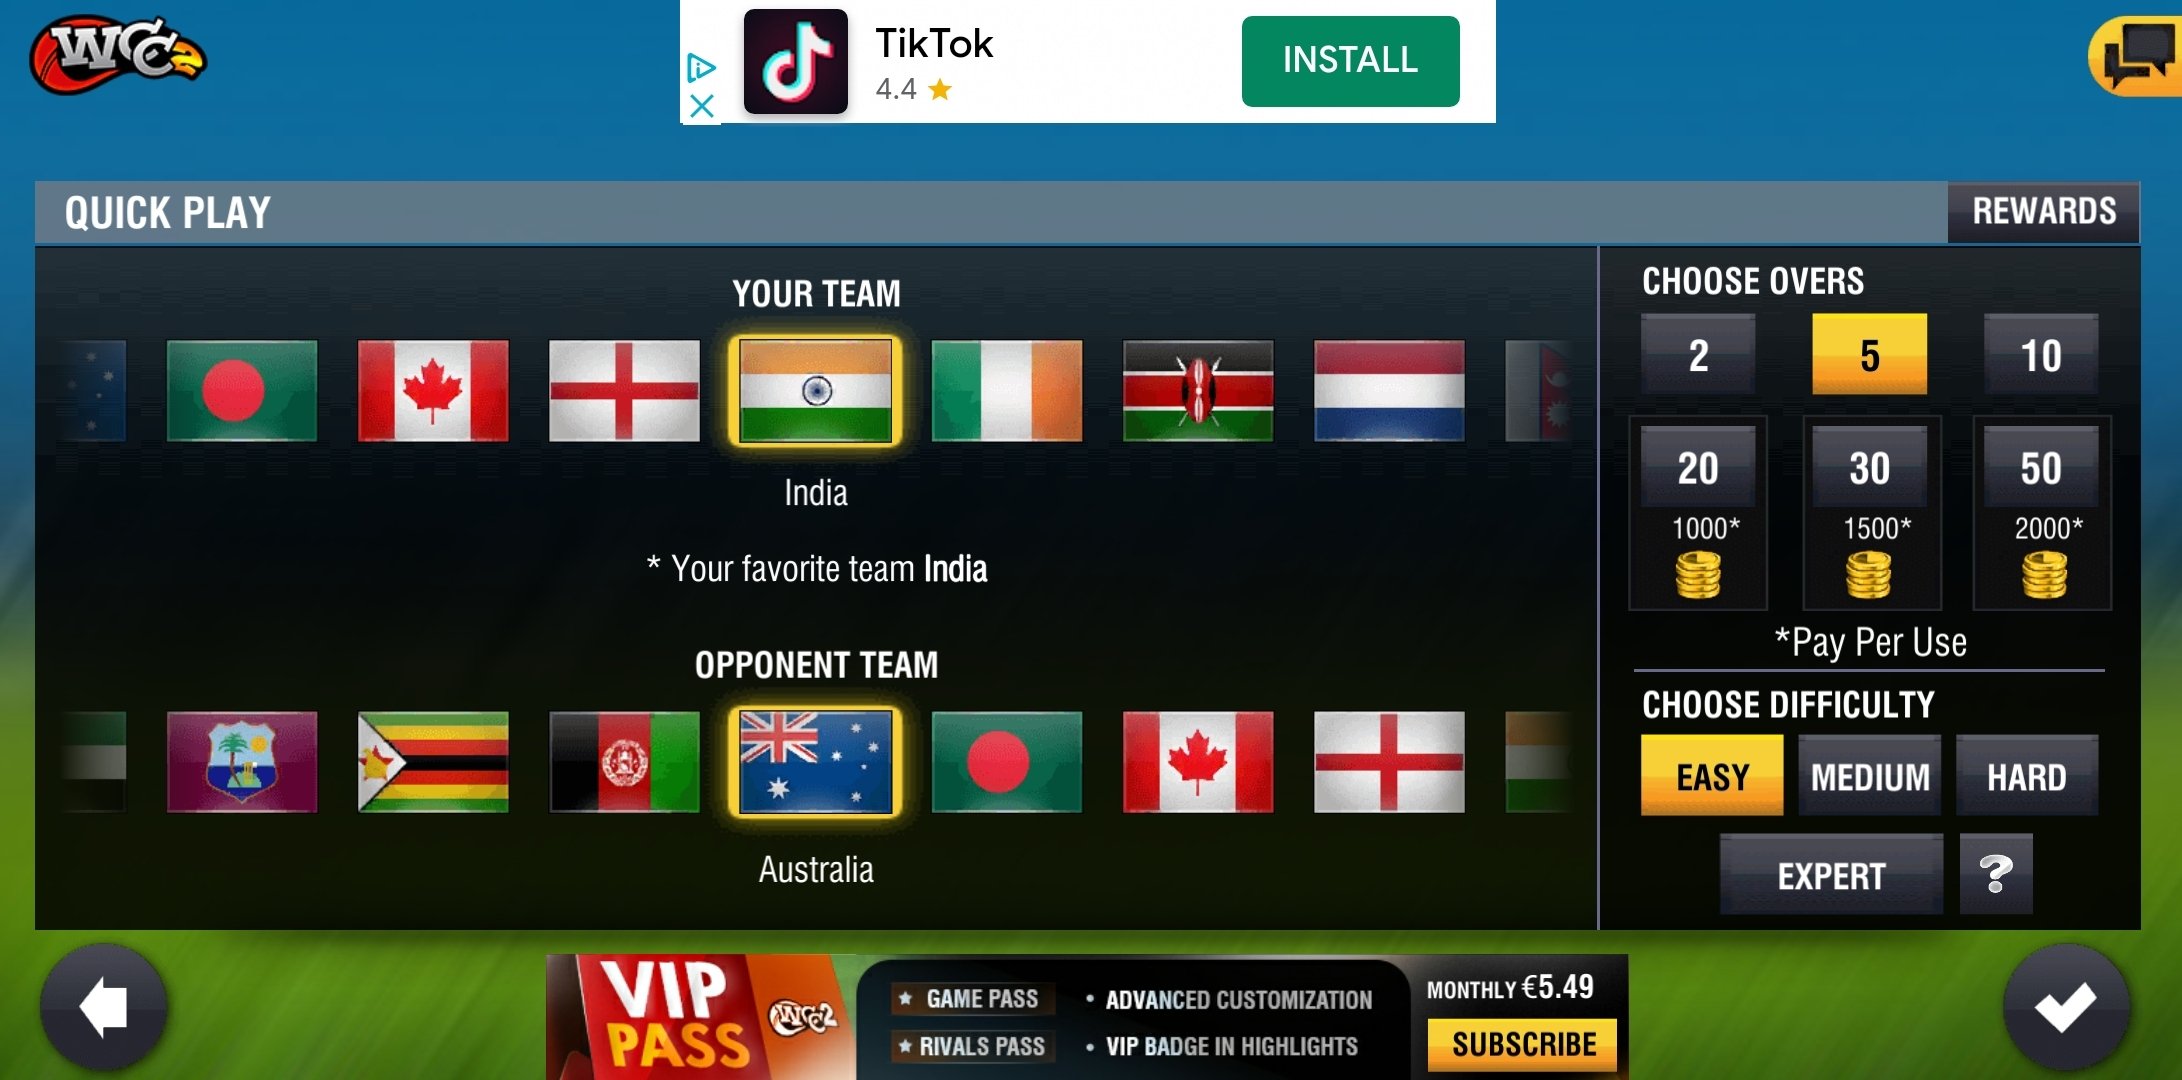 world cricket championship 2 game download apk mod